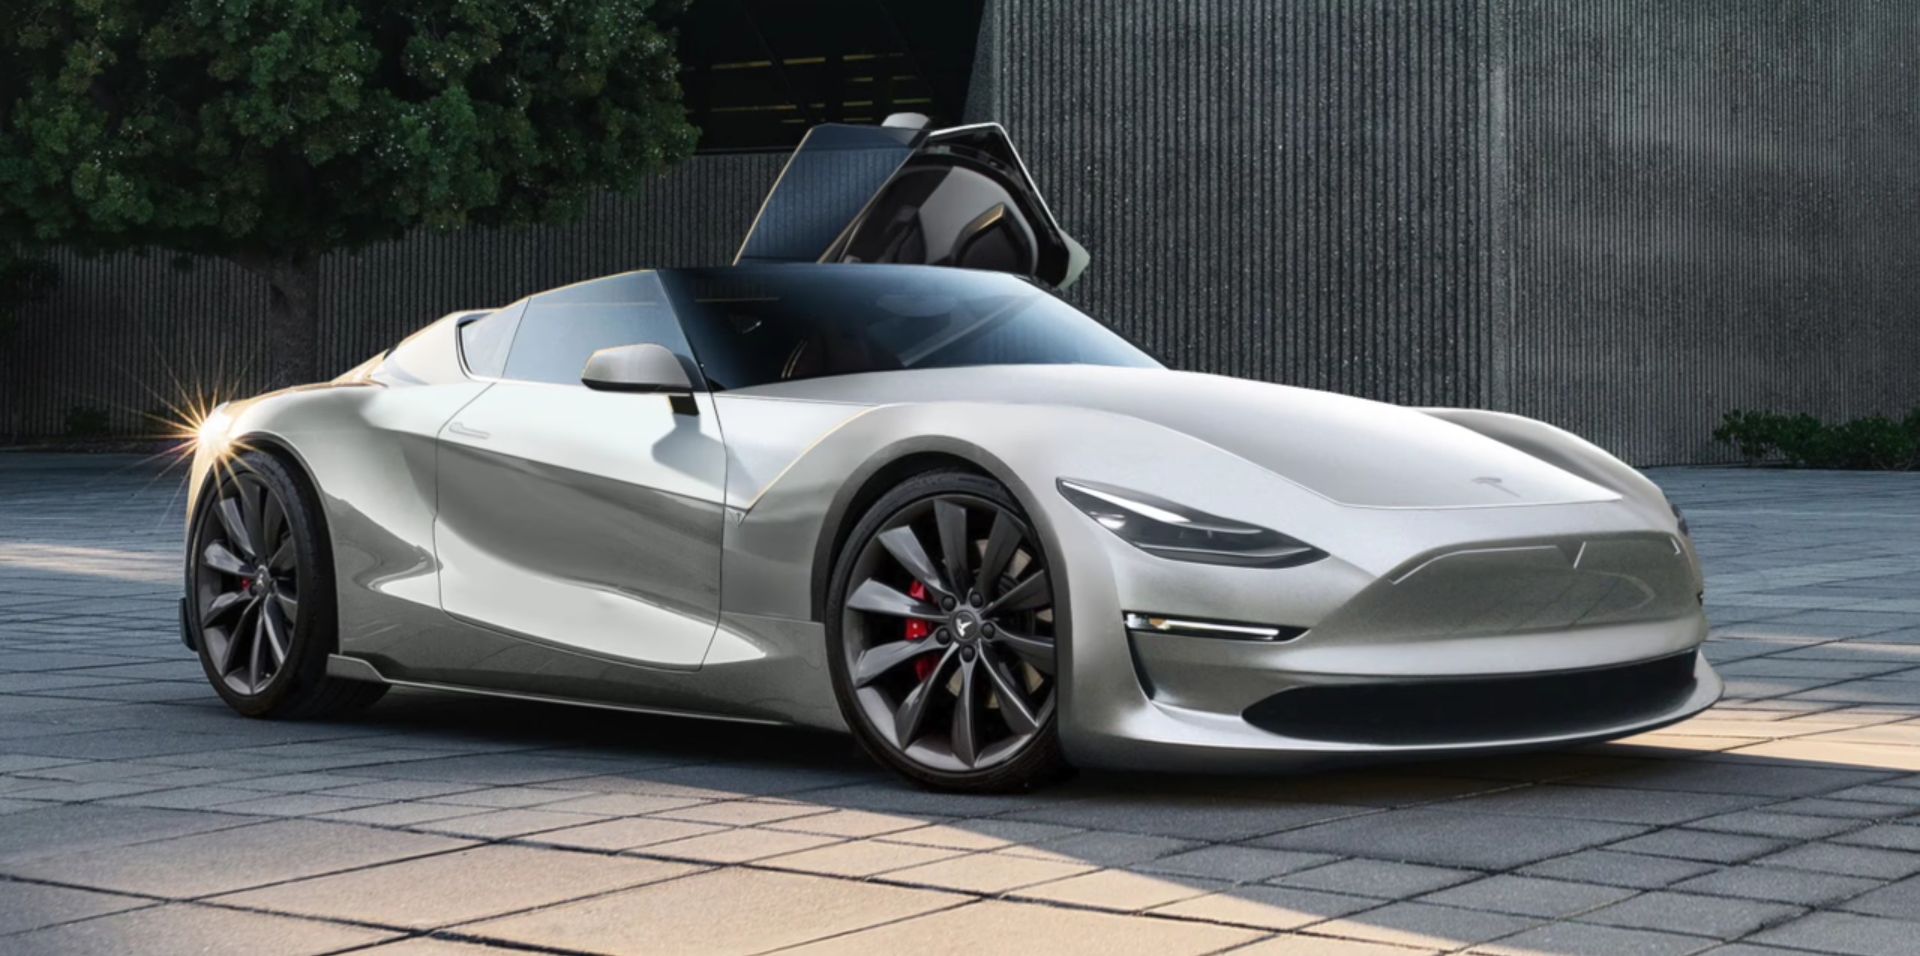 Tesla nextgen Roadster unofficial render tries to envision Tesla's